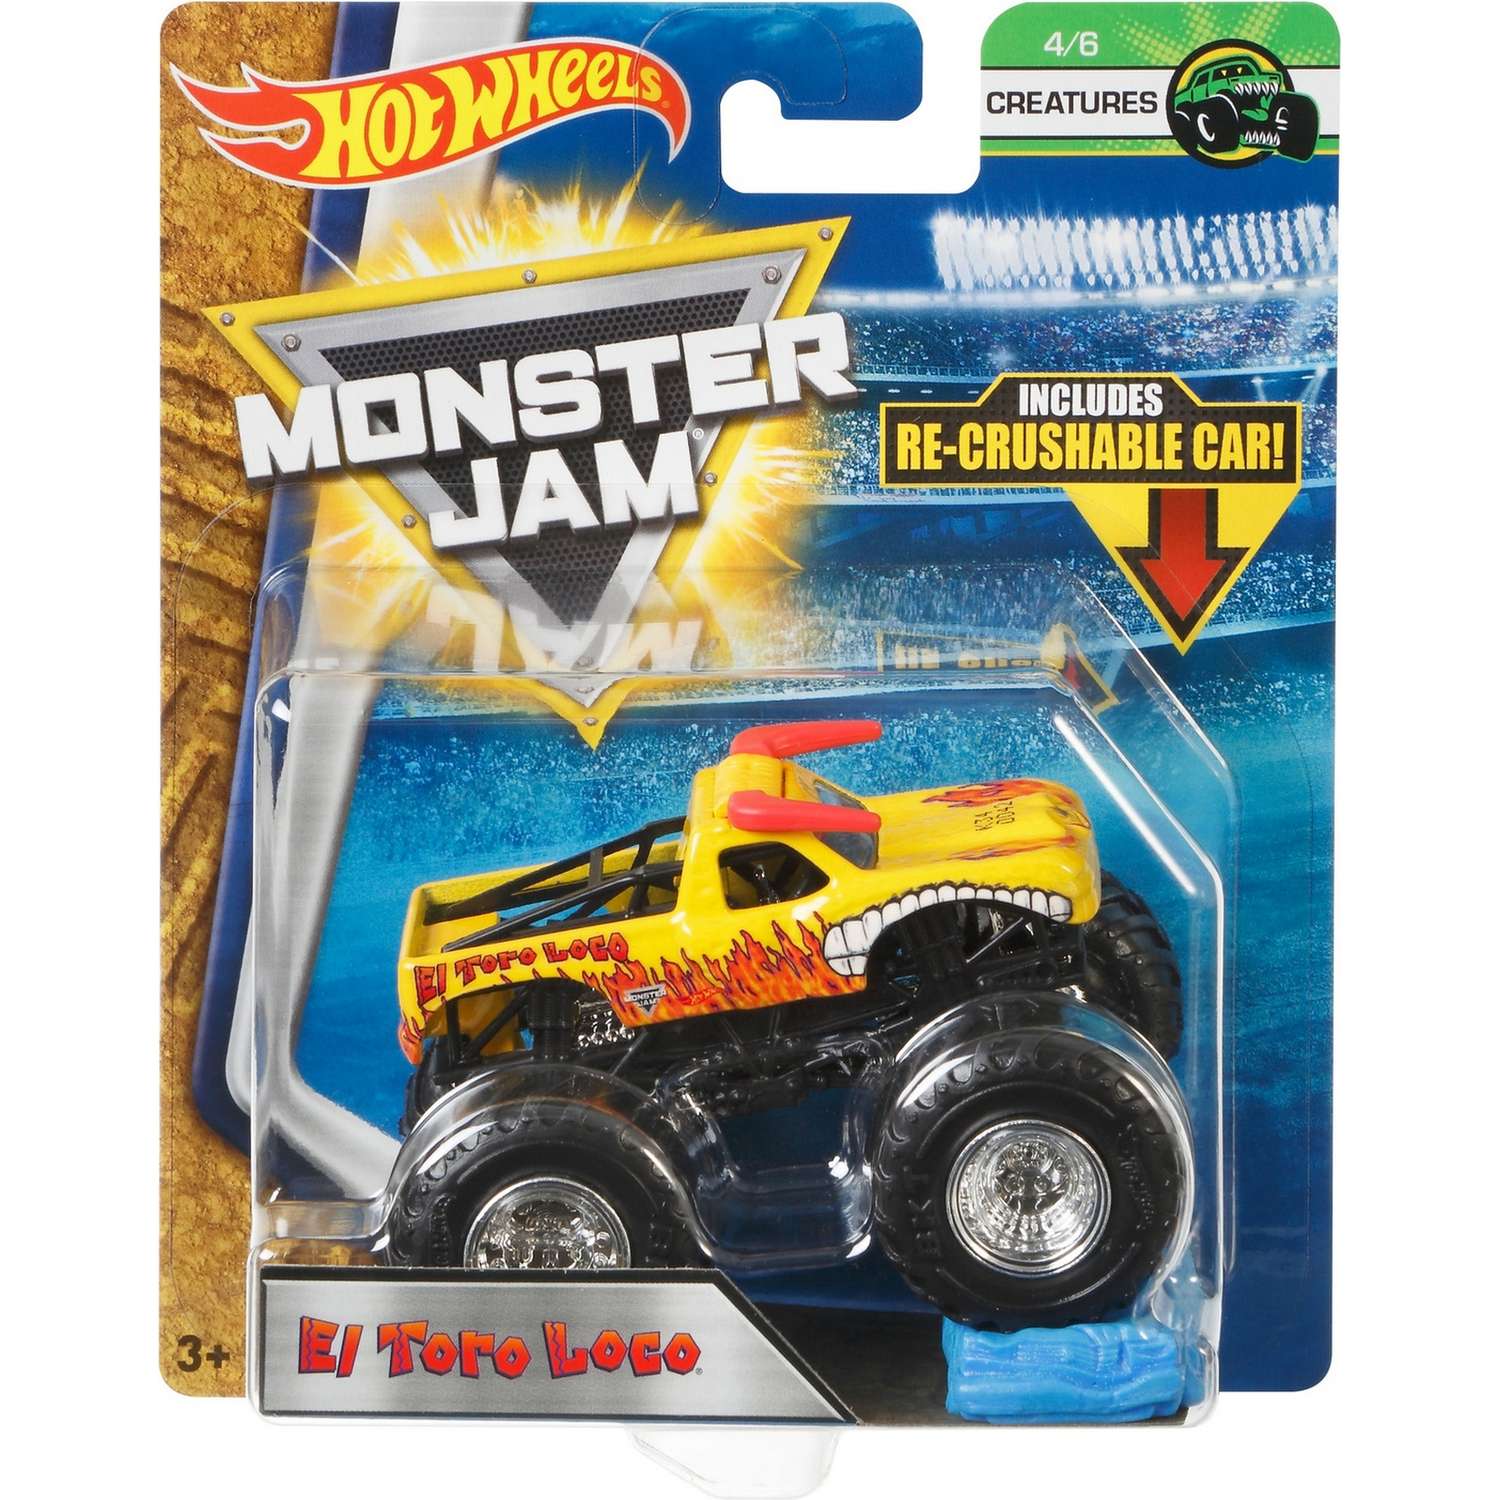 Машина Hot Wheels Monster Jam Creatures Эль Торо Локо Желтый FLX40 21572 - фото 2